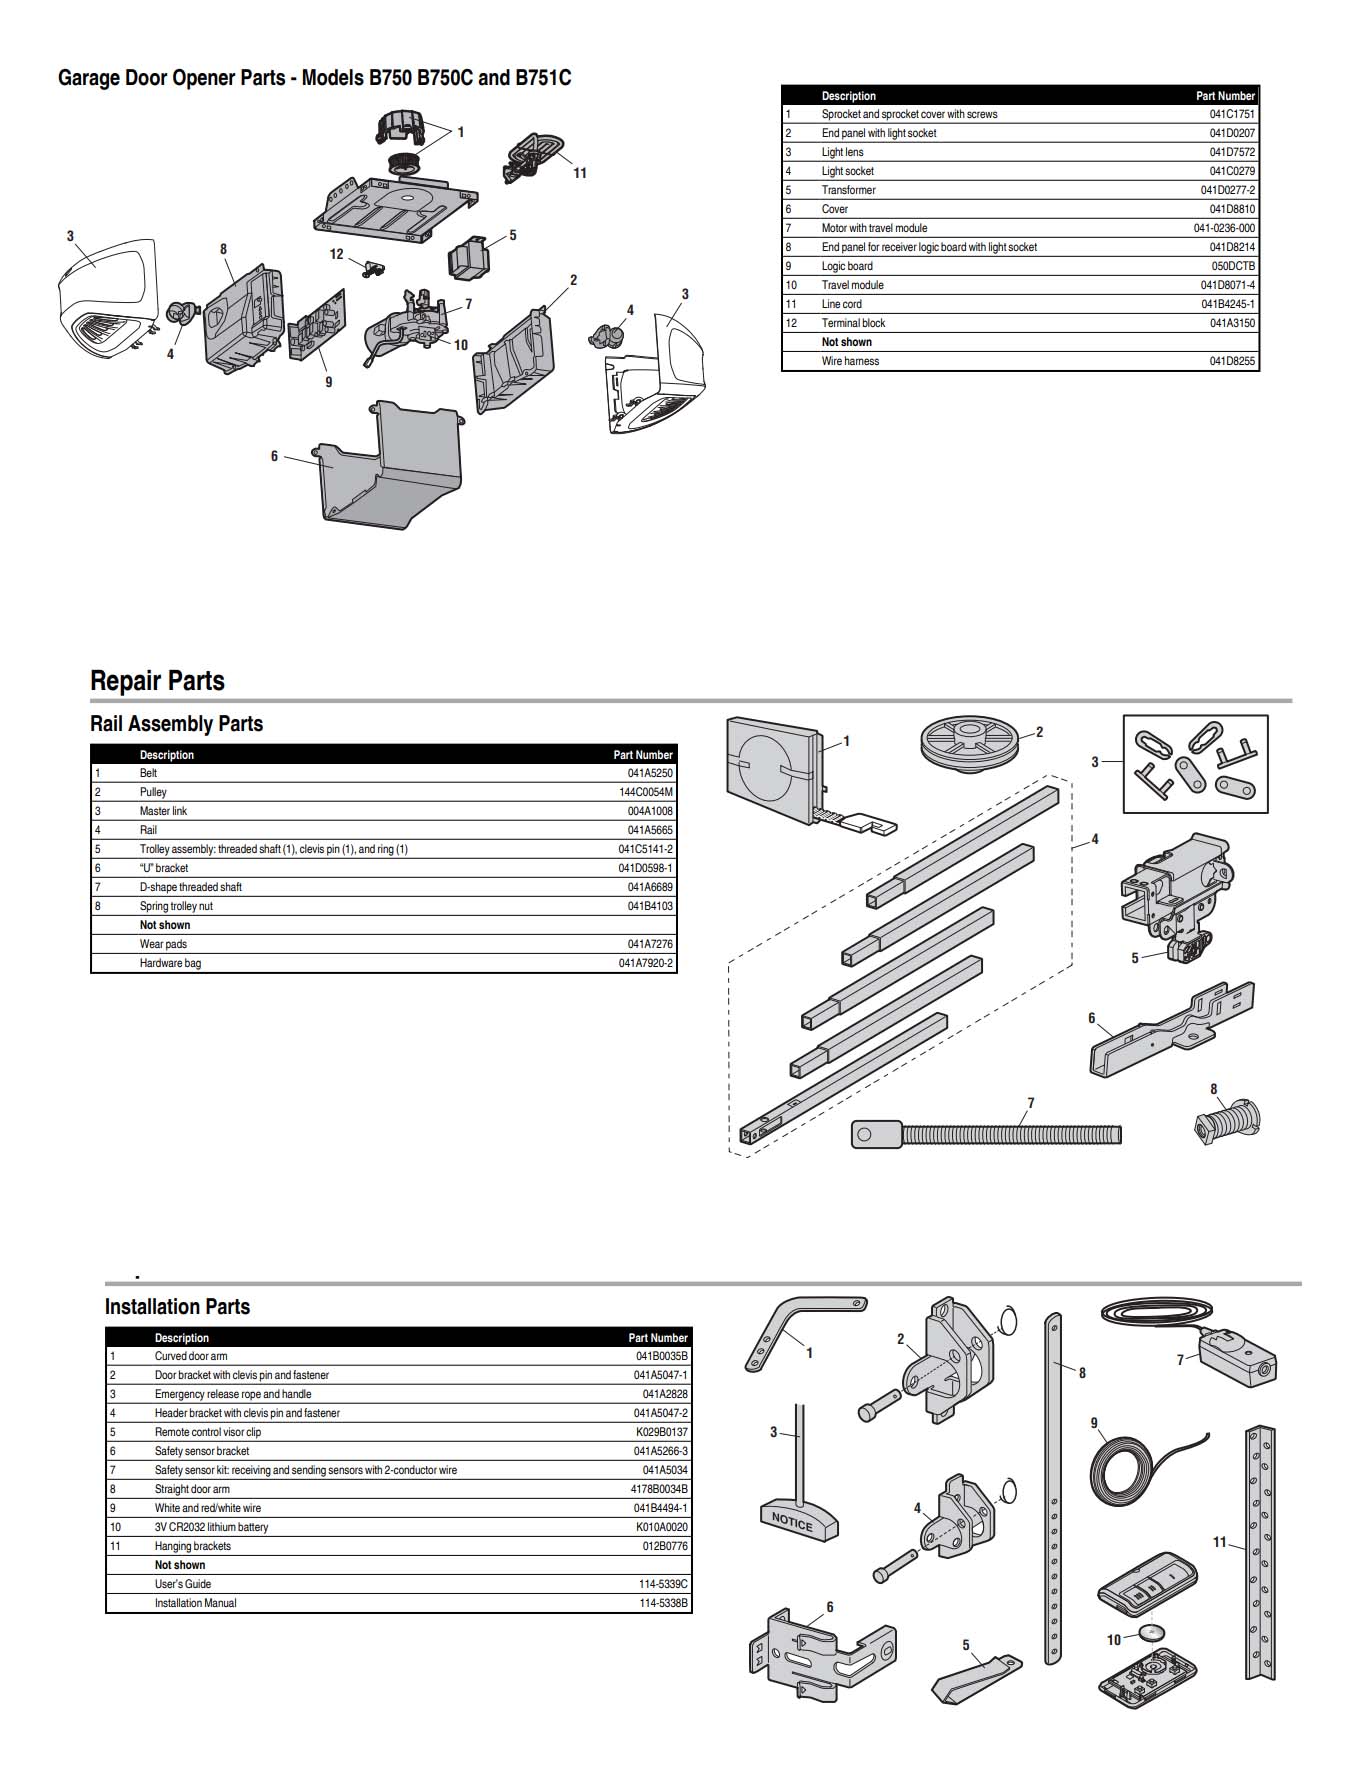 Chamberlain B750, B750C and B751C Garage Door Opener Parts Diagram and List